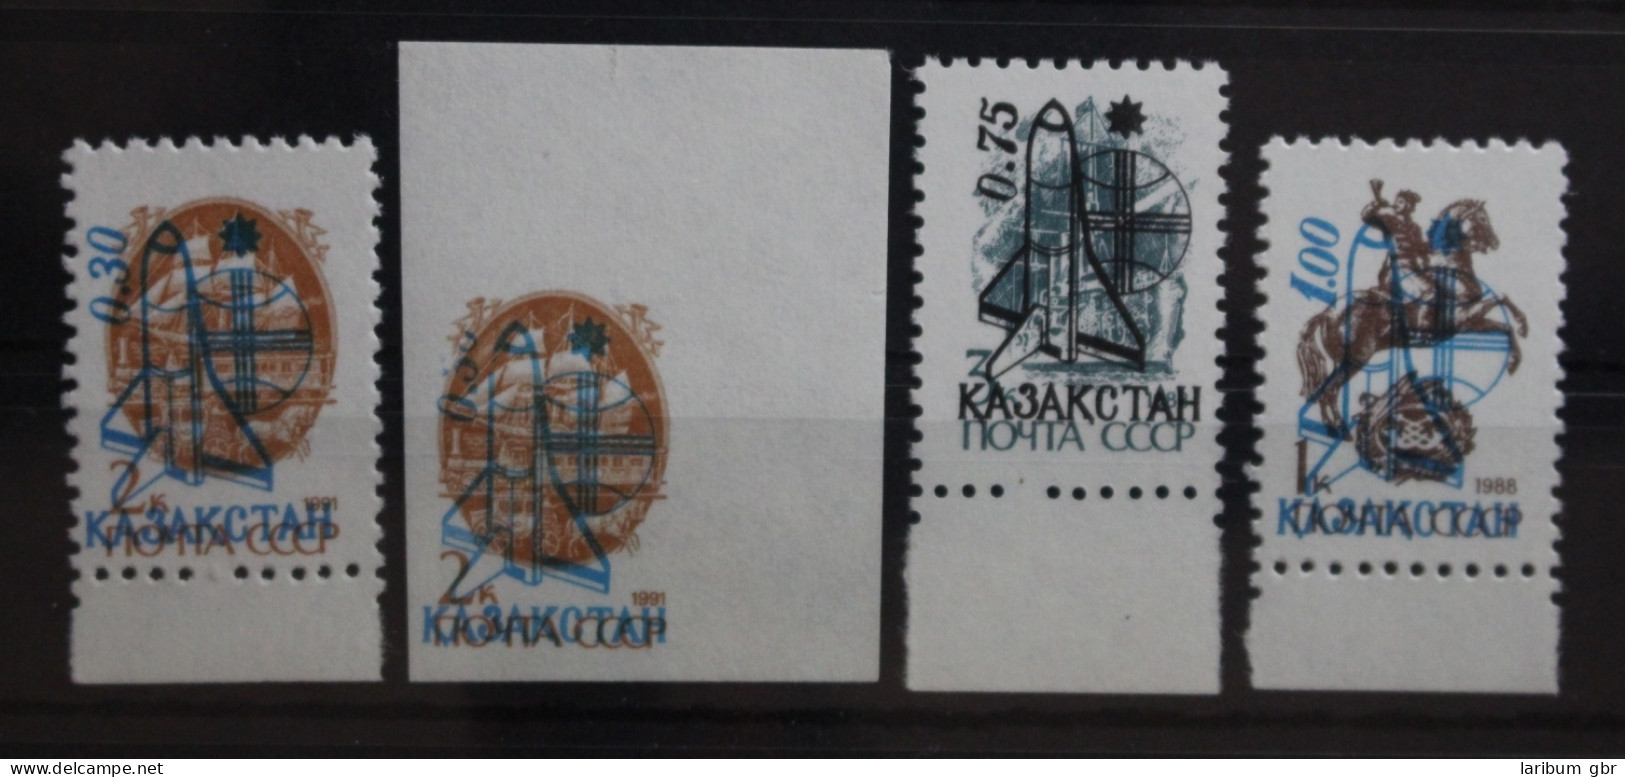 Kasachstan 8-10 Postfrisch #TE044 - Kasachstan